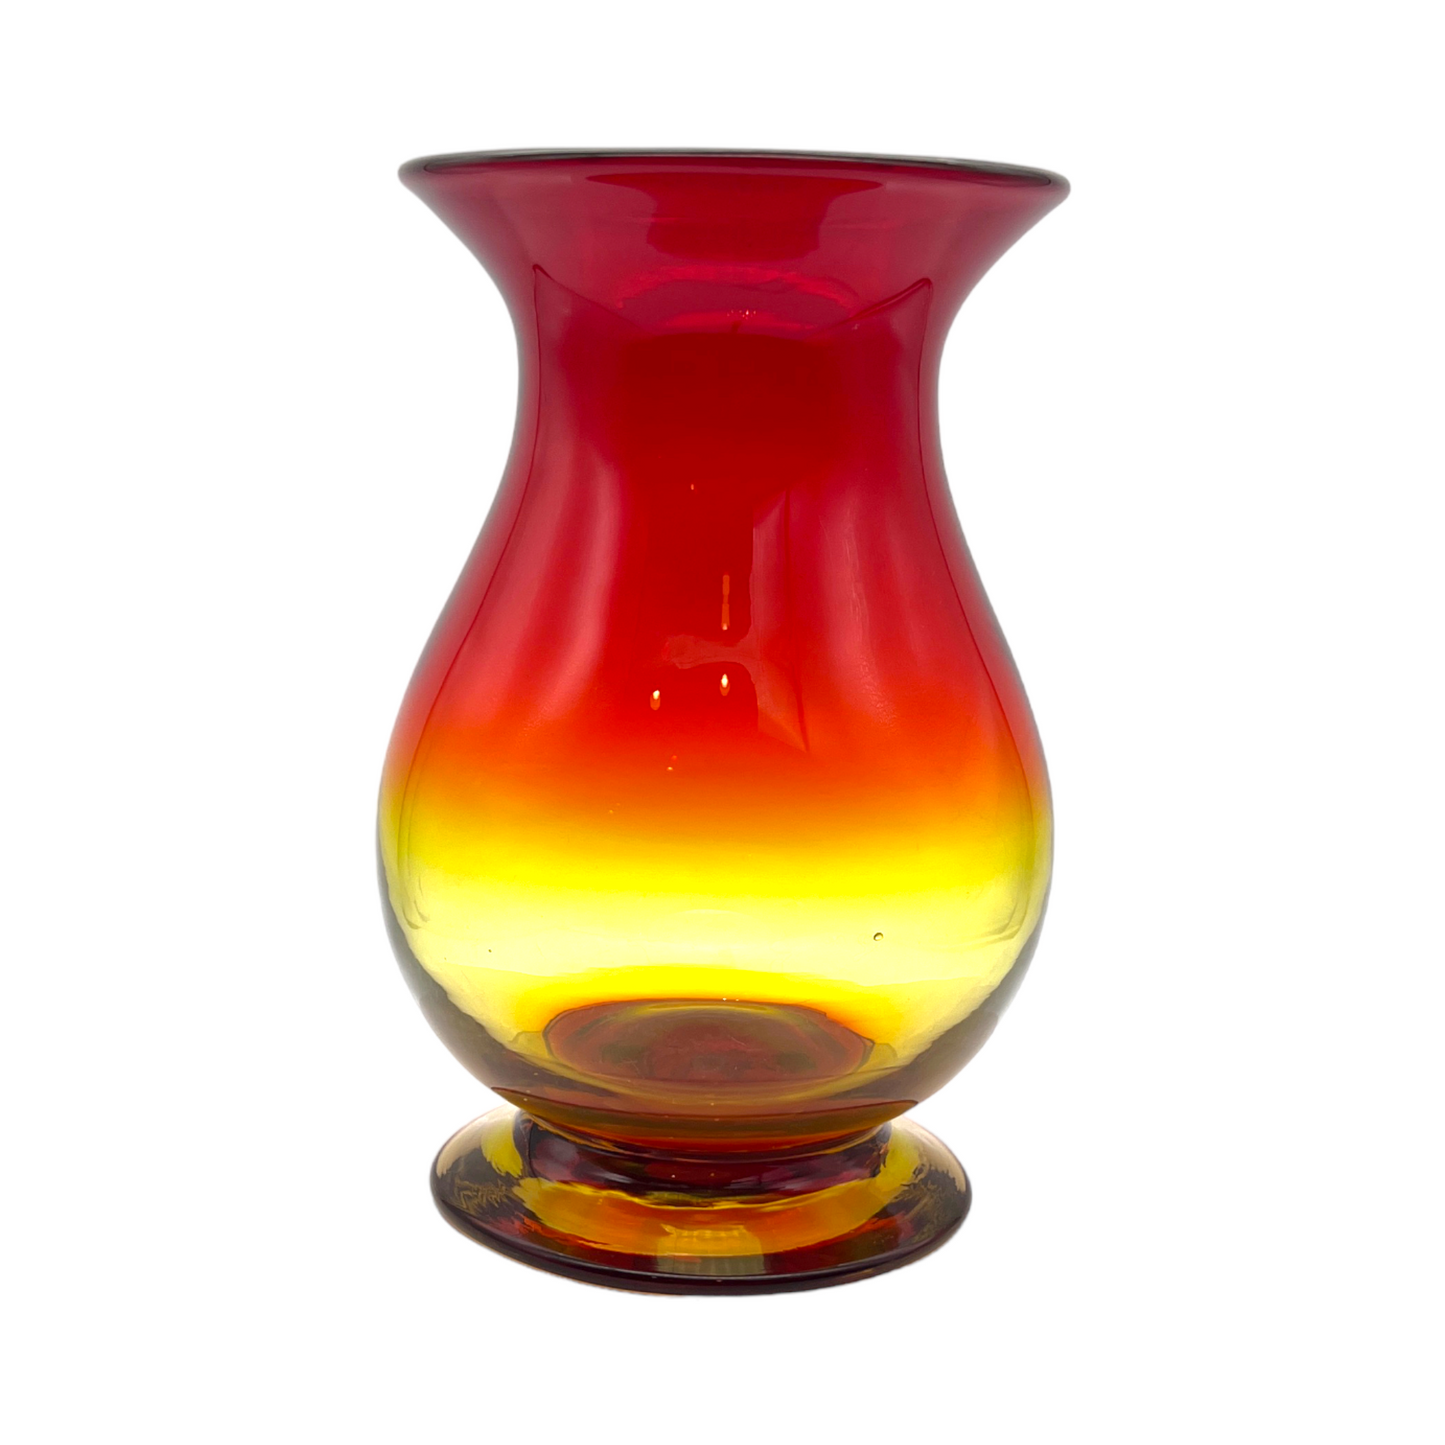 Amberina - Glass Vase With Pedestal - Glows - Vintage - Large - 8.5"